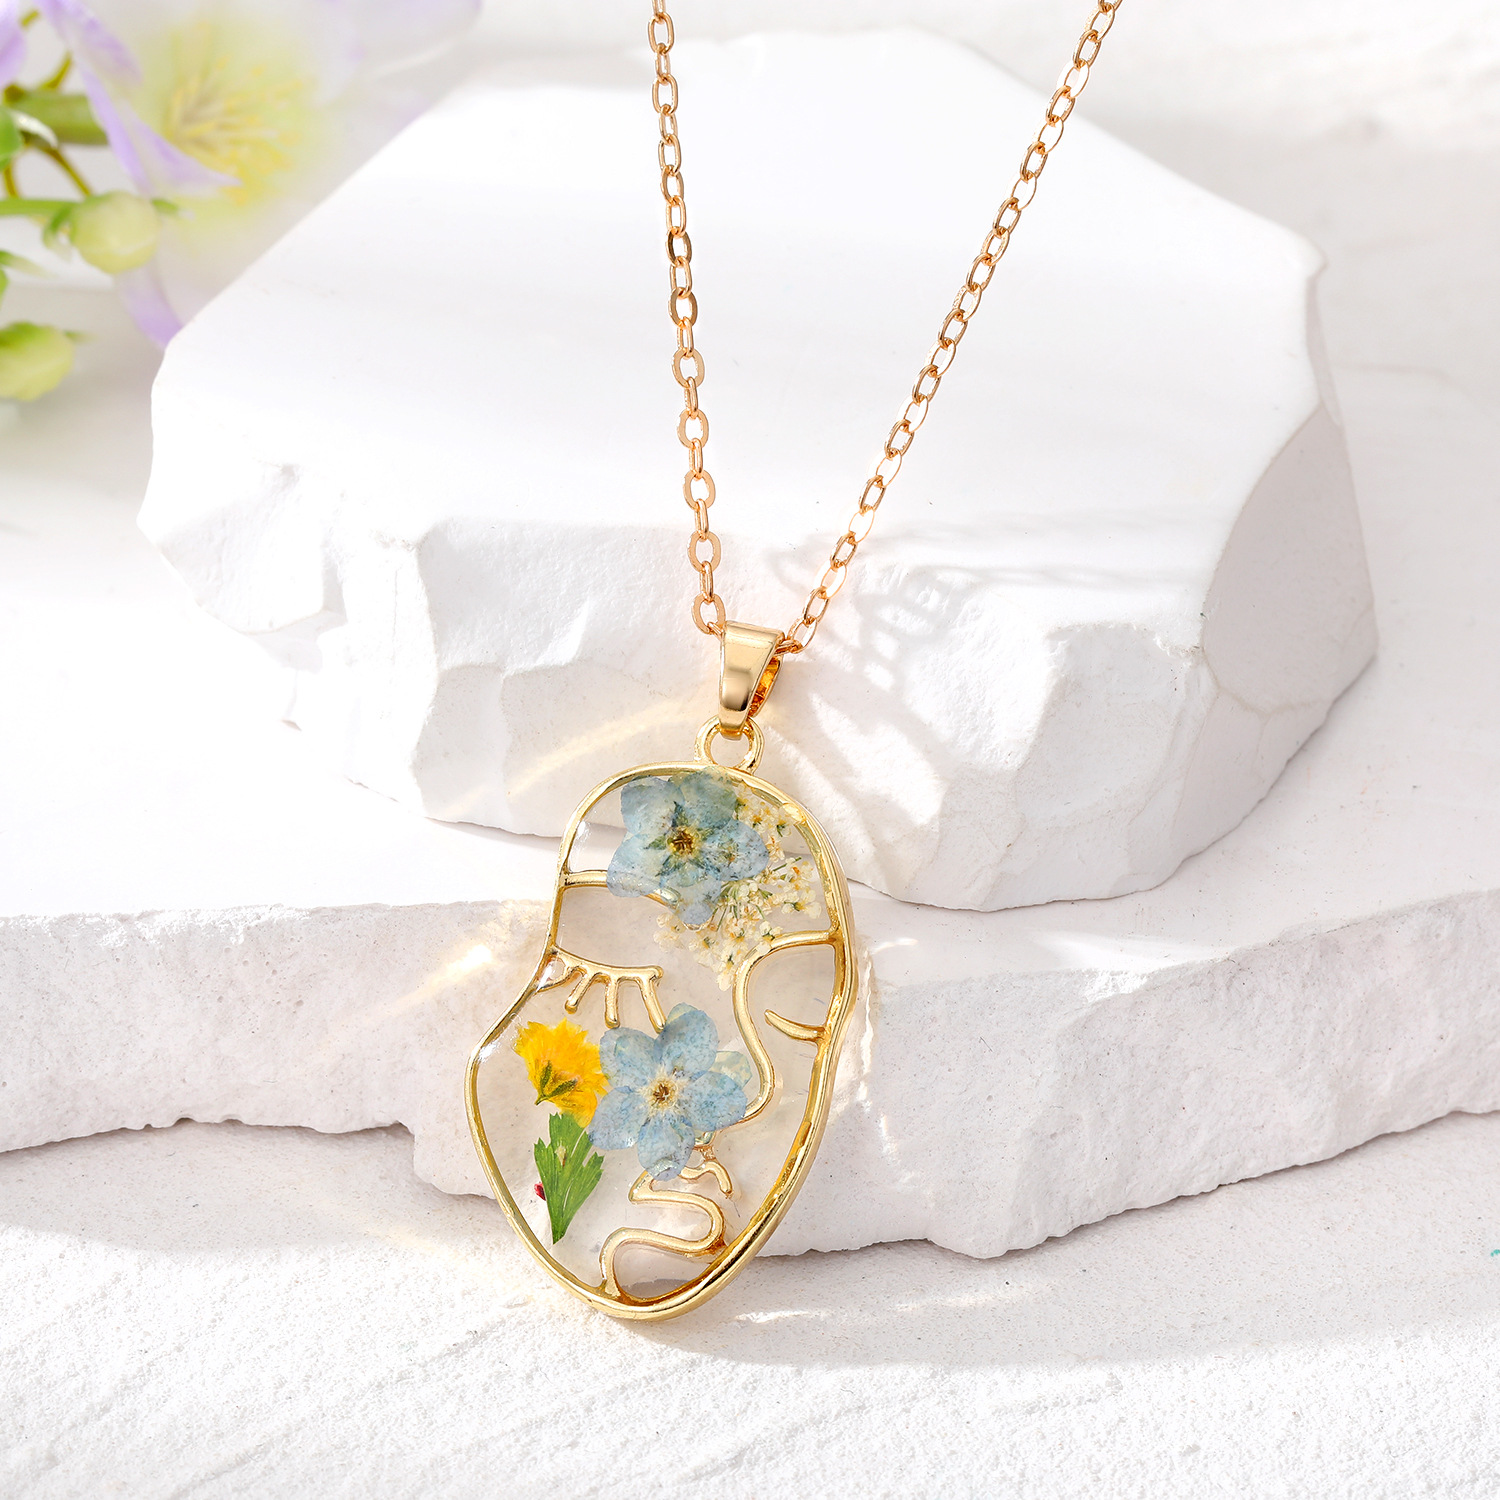 4:Golden face light blue flower necklace